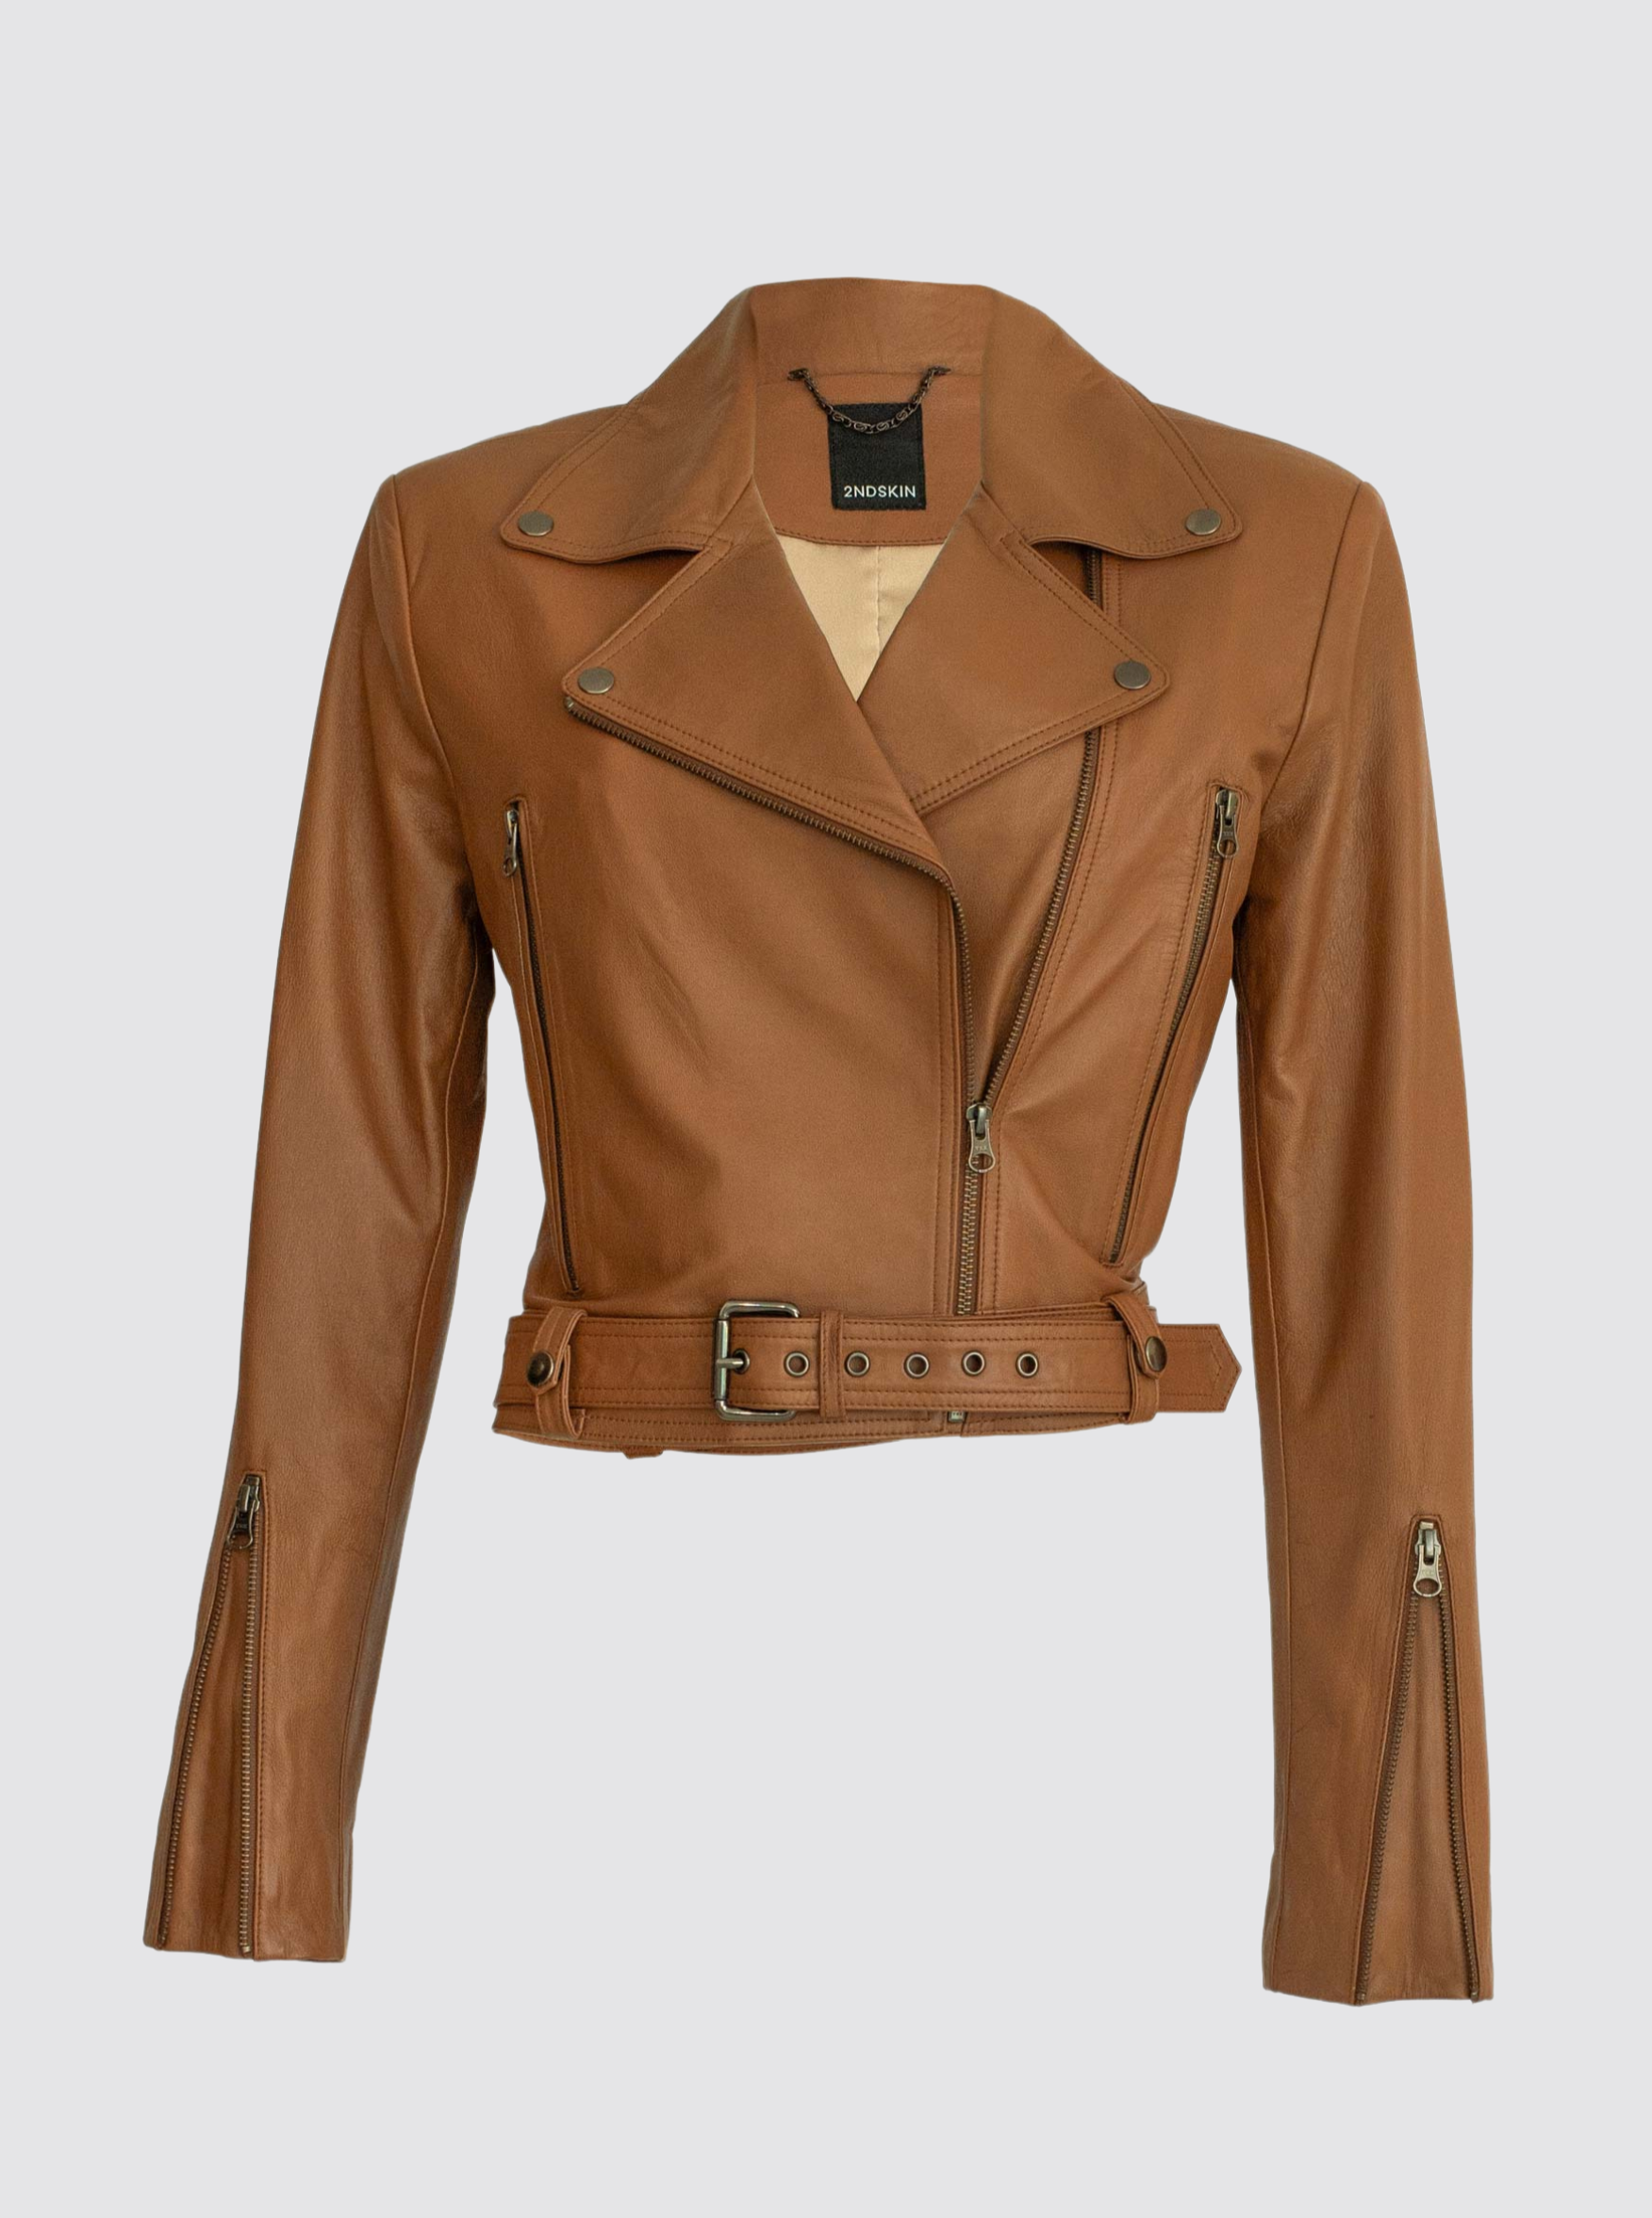 2NDSKIN The Label Darcy Biker leather jacket in caramel